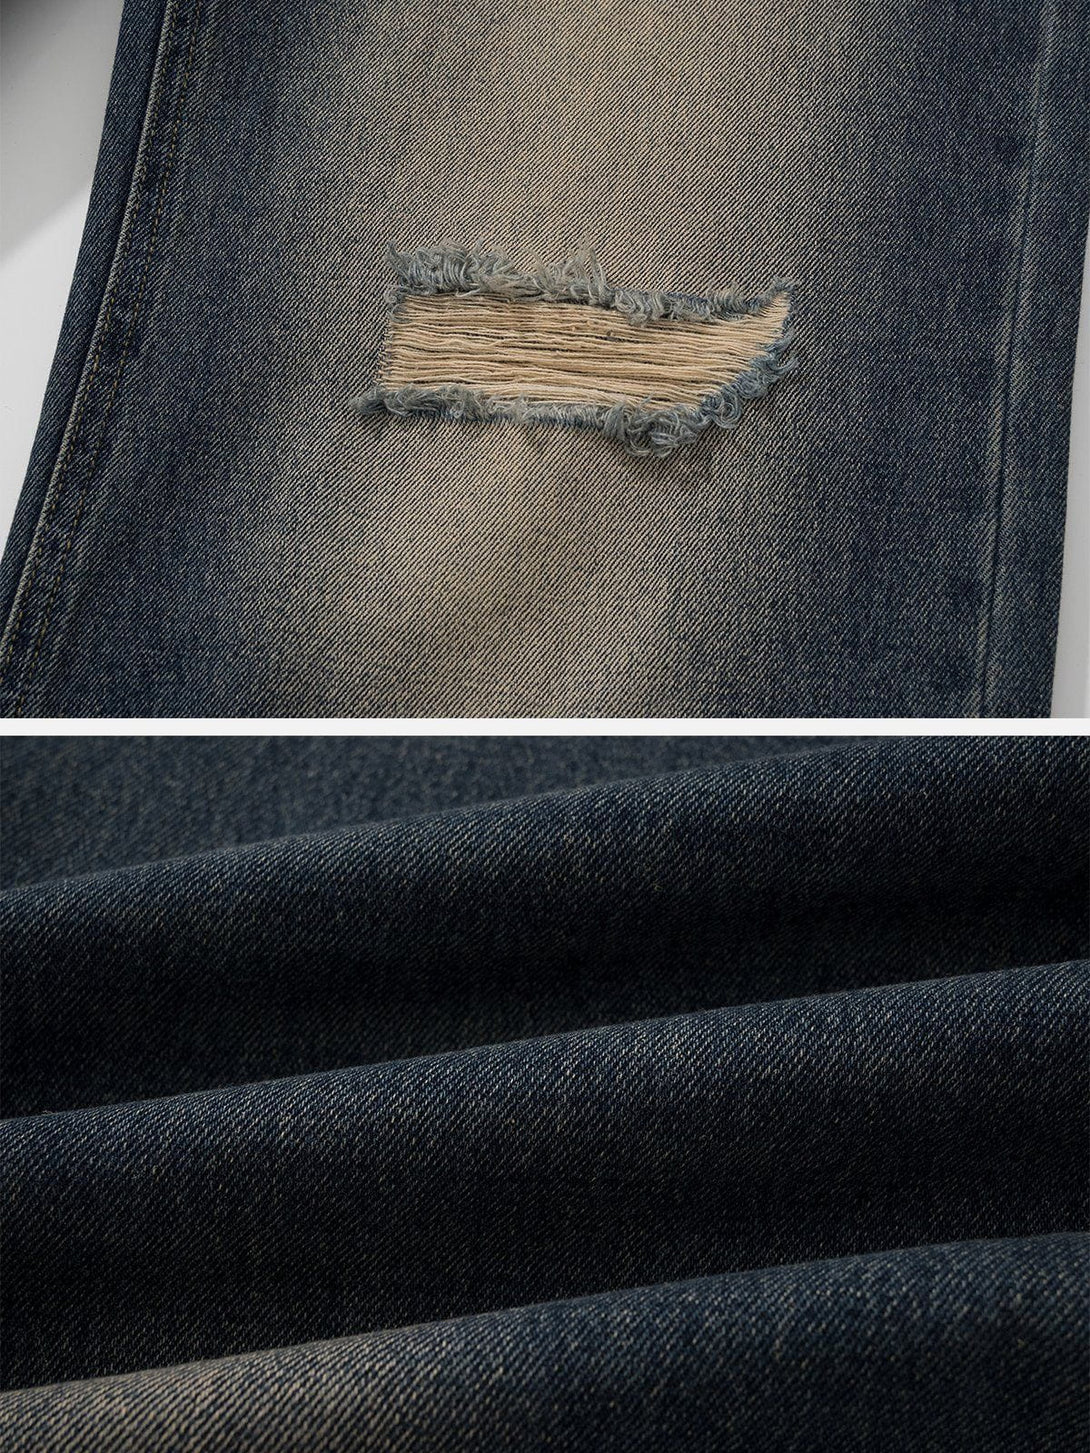 Levefly - Broken Holes Washed Jeans - Streetwear Fashion - levefly.com